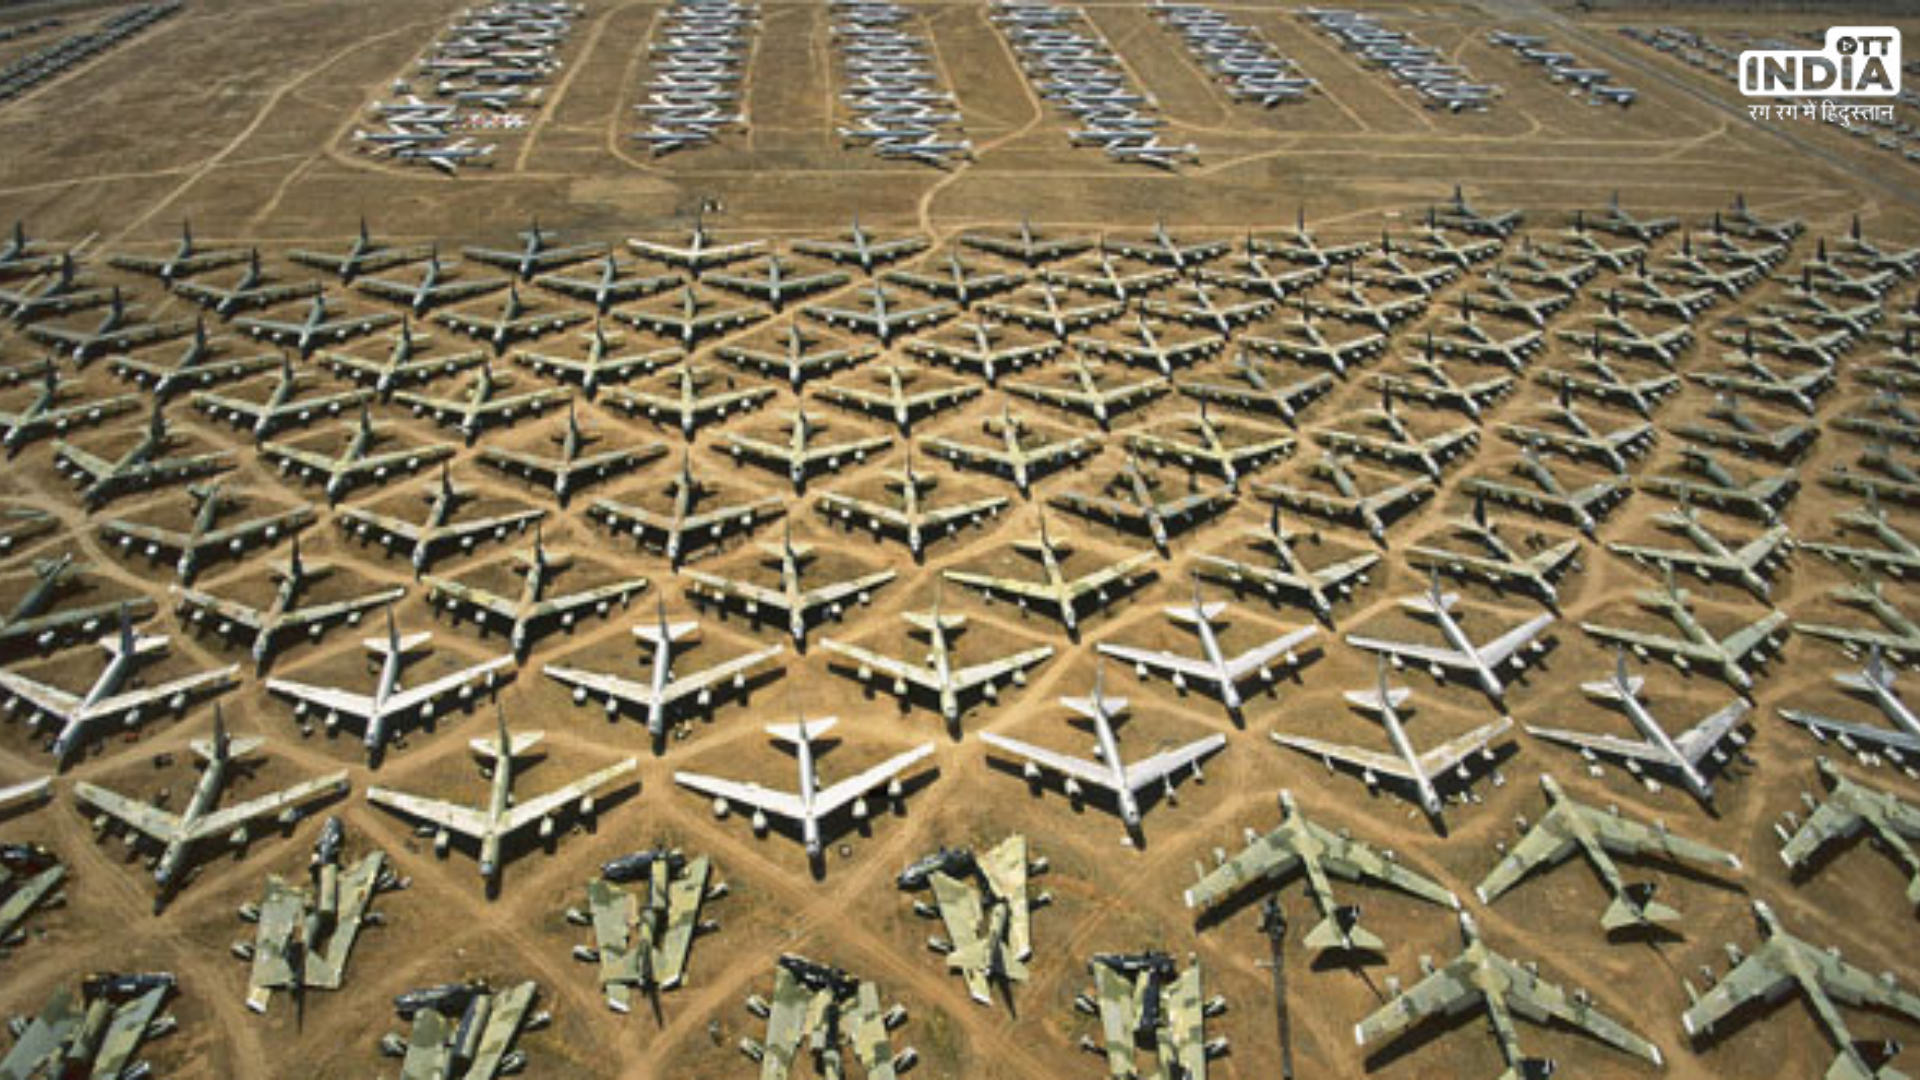 Tucson Aircraft Graveyard